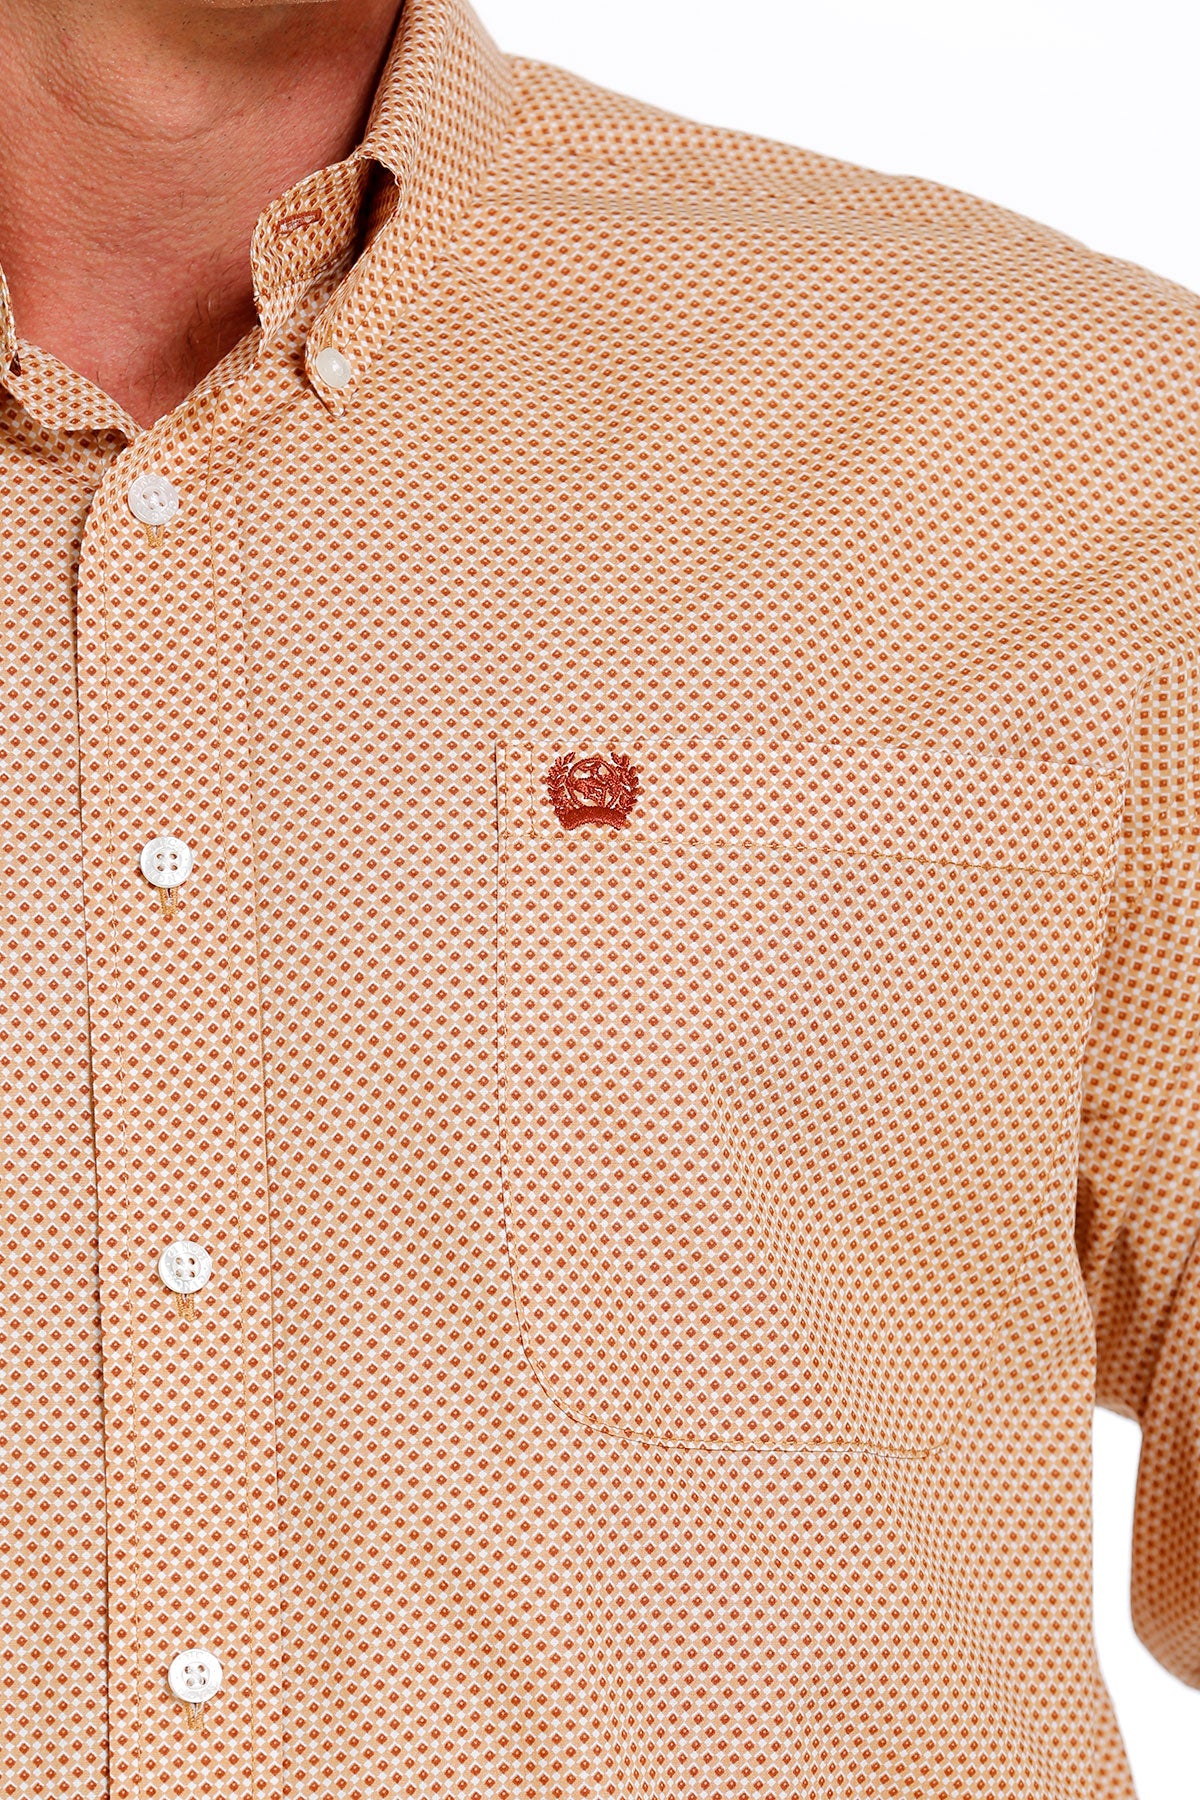 Men's Long Sleeve Peach Print Button Up